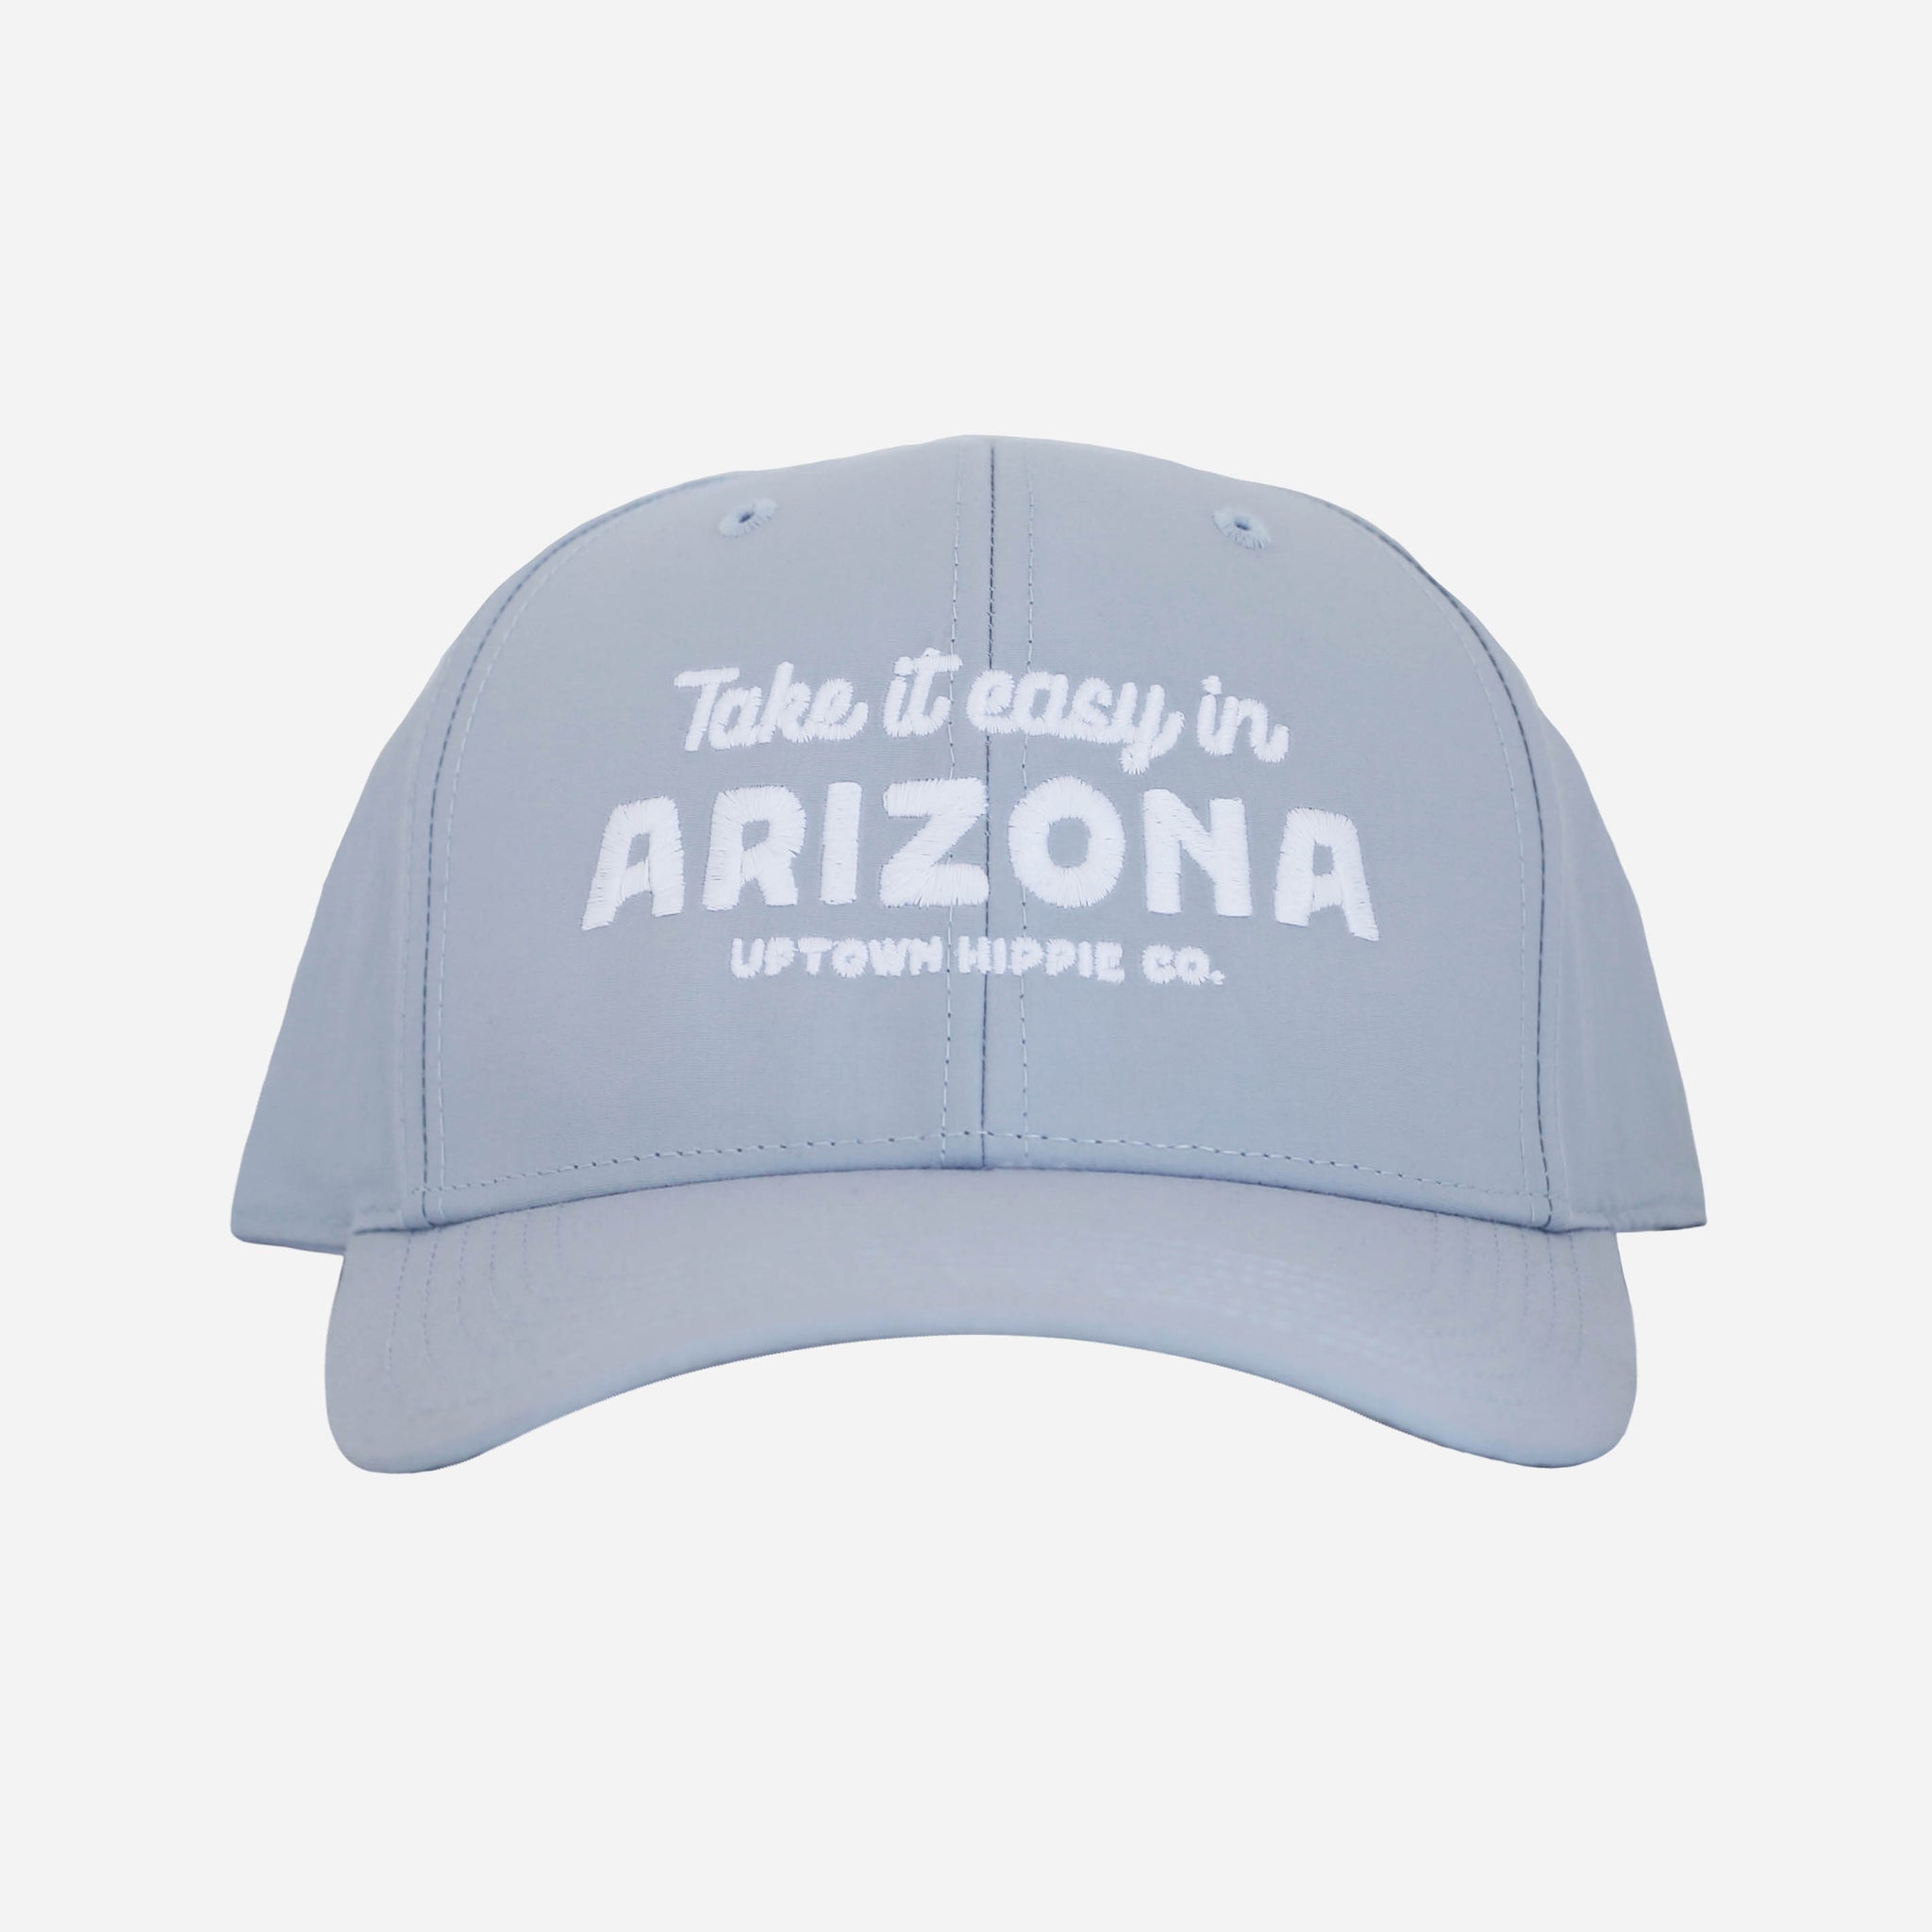 Take it Easy in Arizona Hat